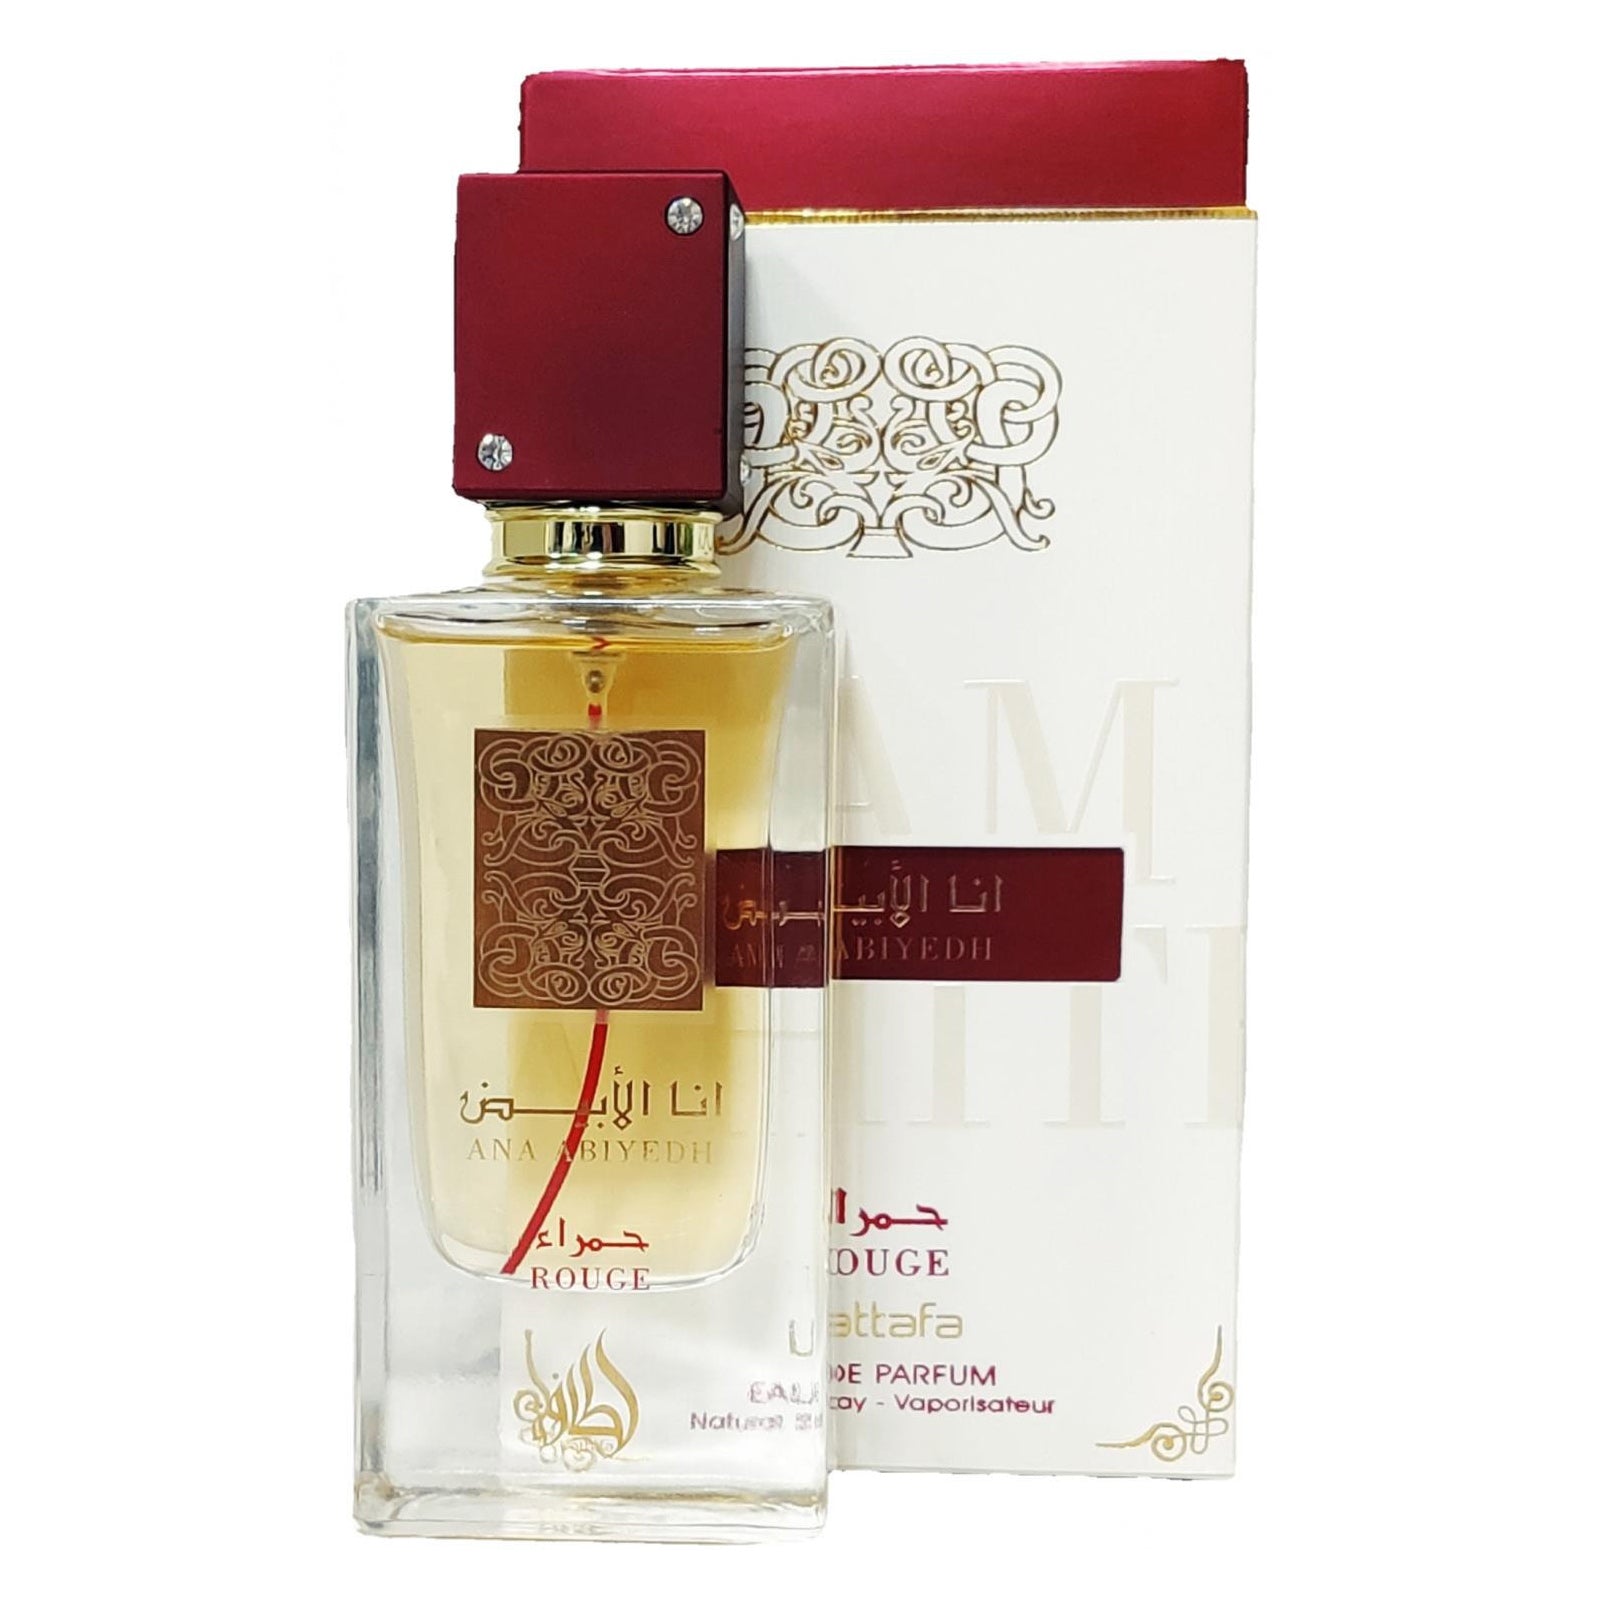 Eau de parfum Ana Abiyedh Rouge – Lattafa Perfumes